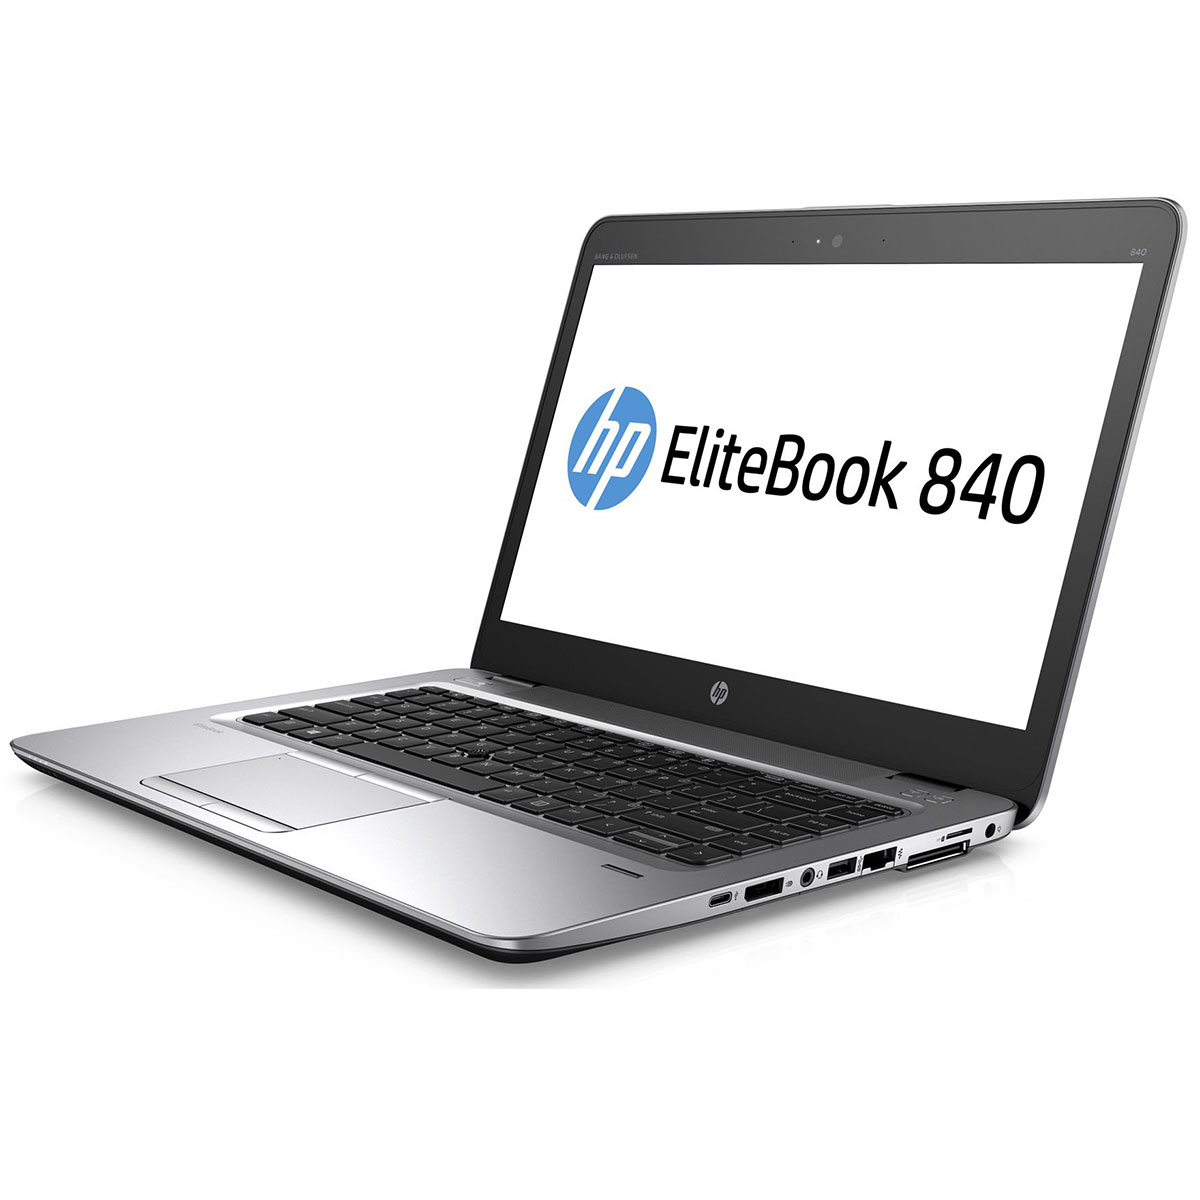 HP Elitebook 840 G4 Corei5 (7th Gen) 8 GB RAM 256 GB SSD with